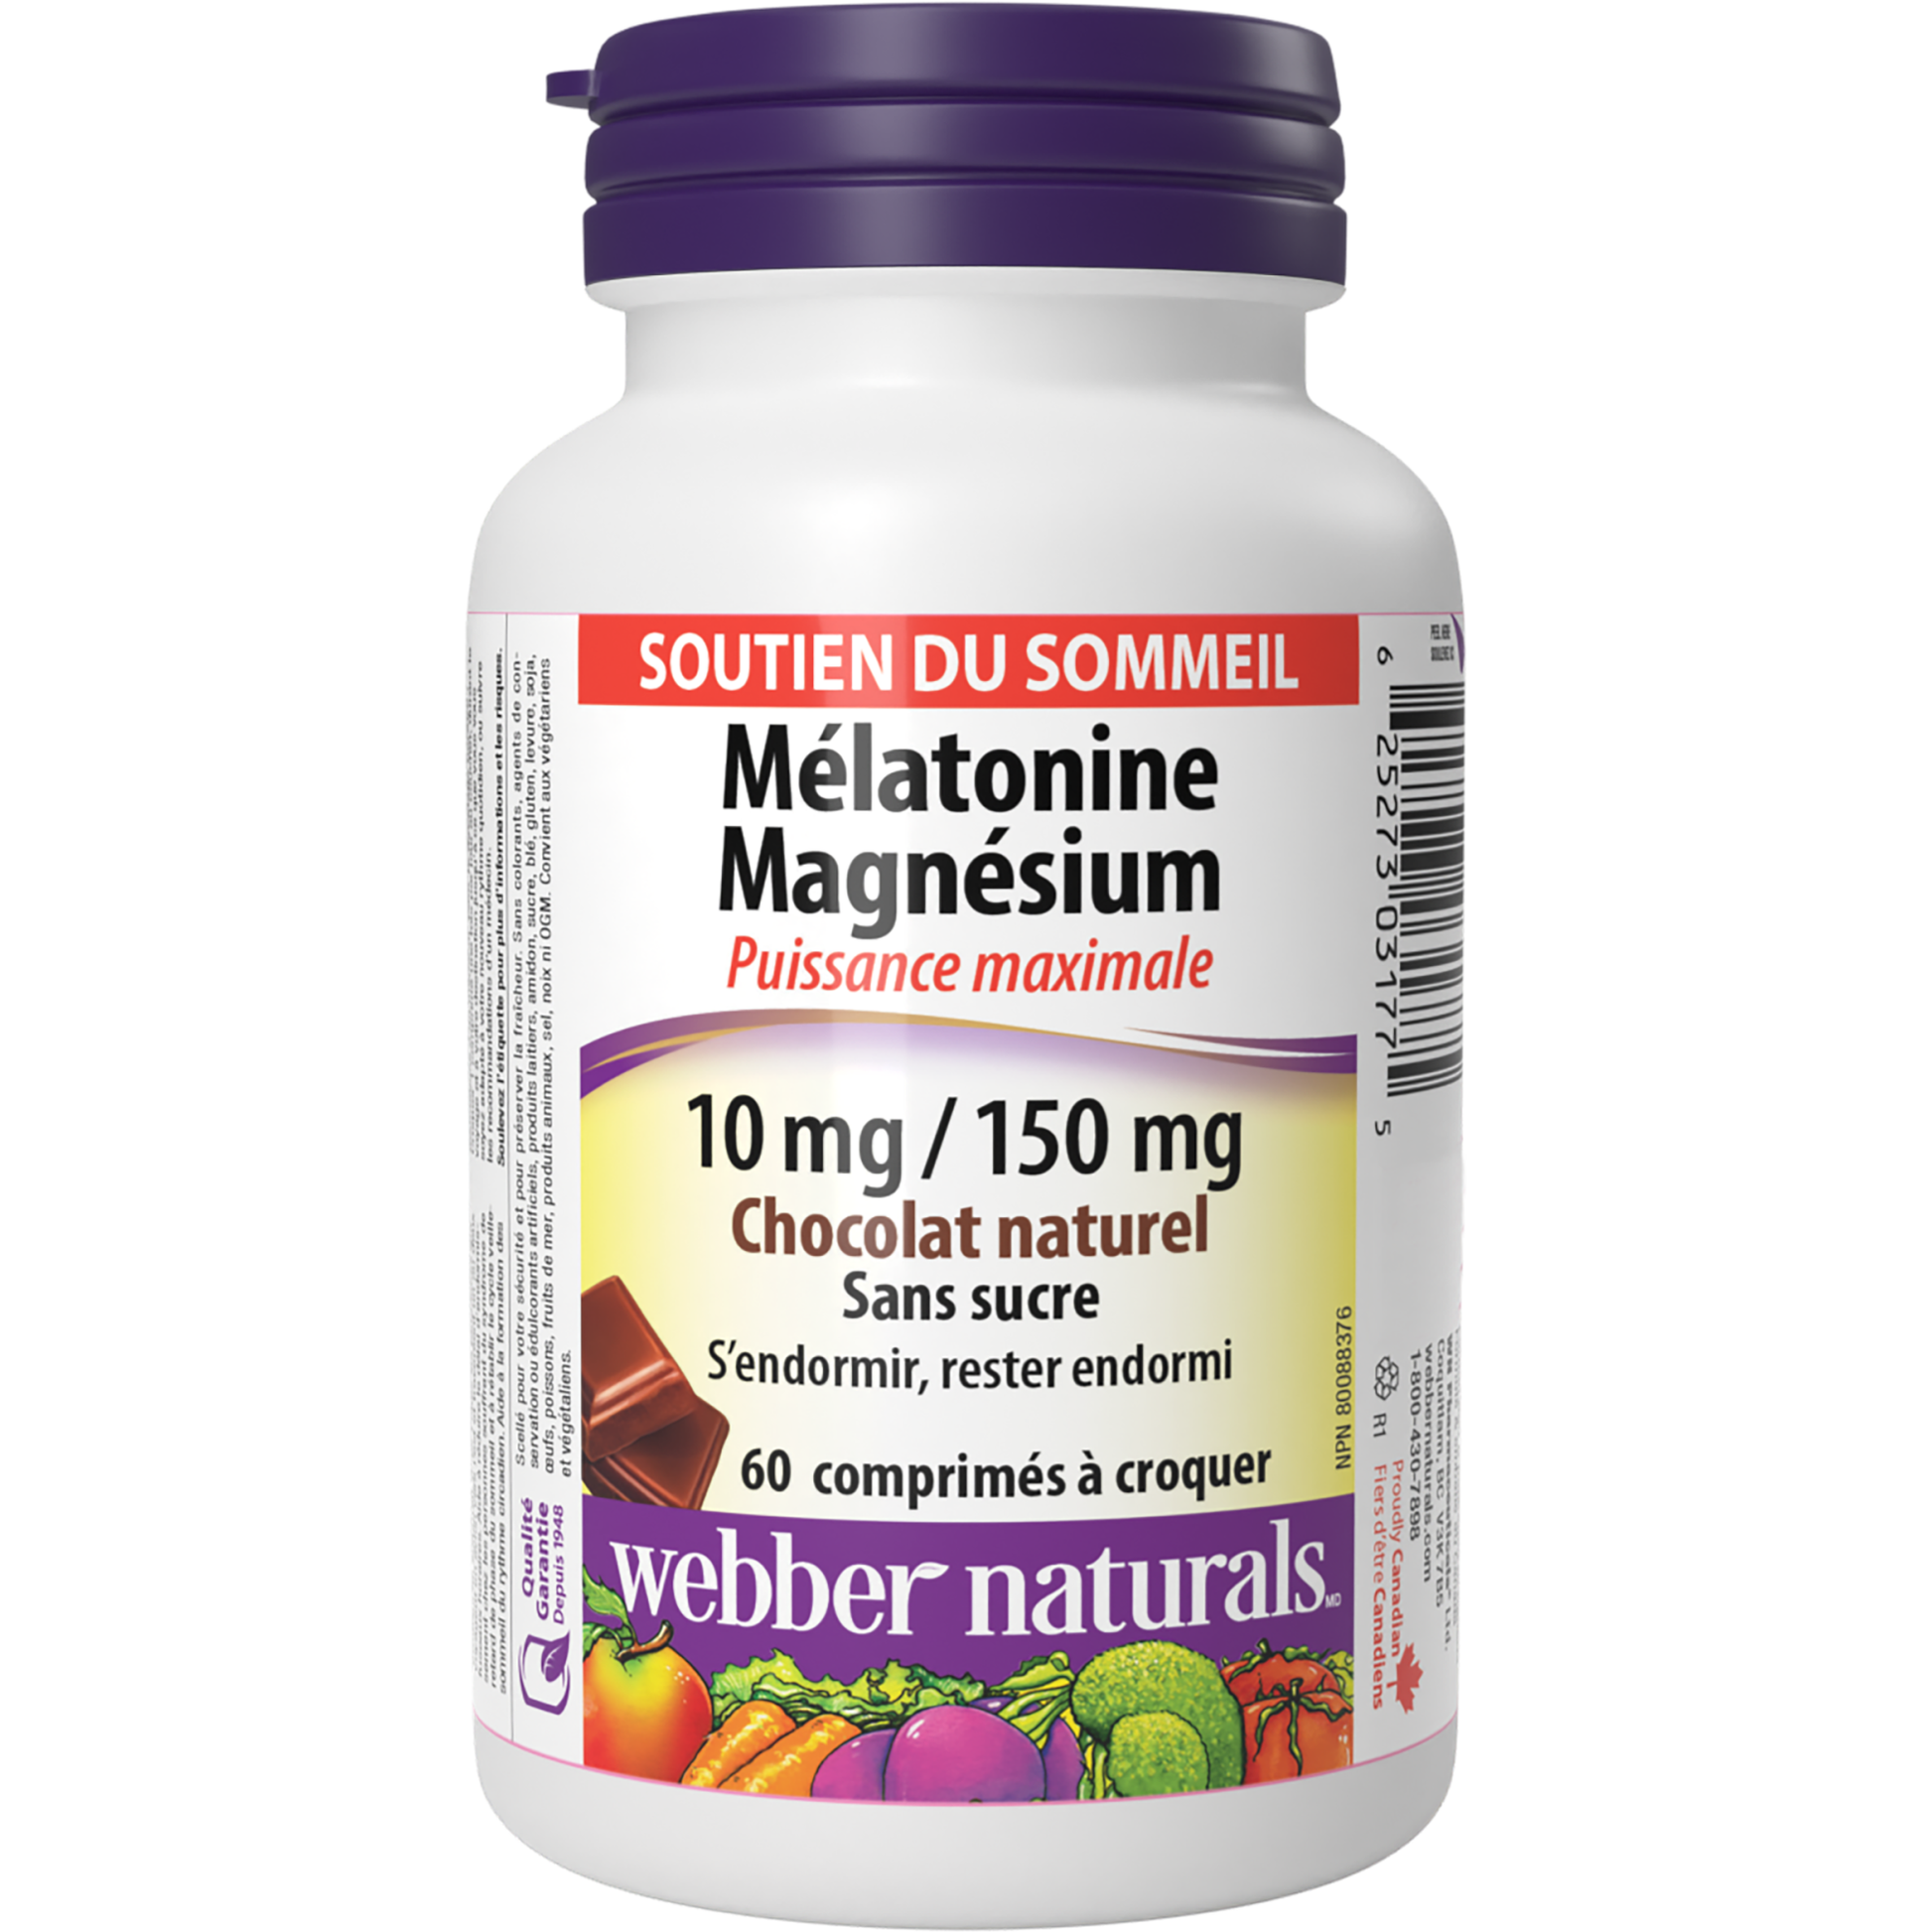 Mélatonine Magnésium Puissance maximale 10 mg/150 mg Chocolat naturel for Webber Naturals|v|hi-res|WN3177